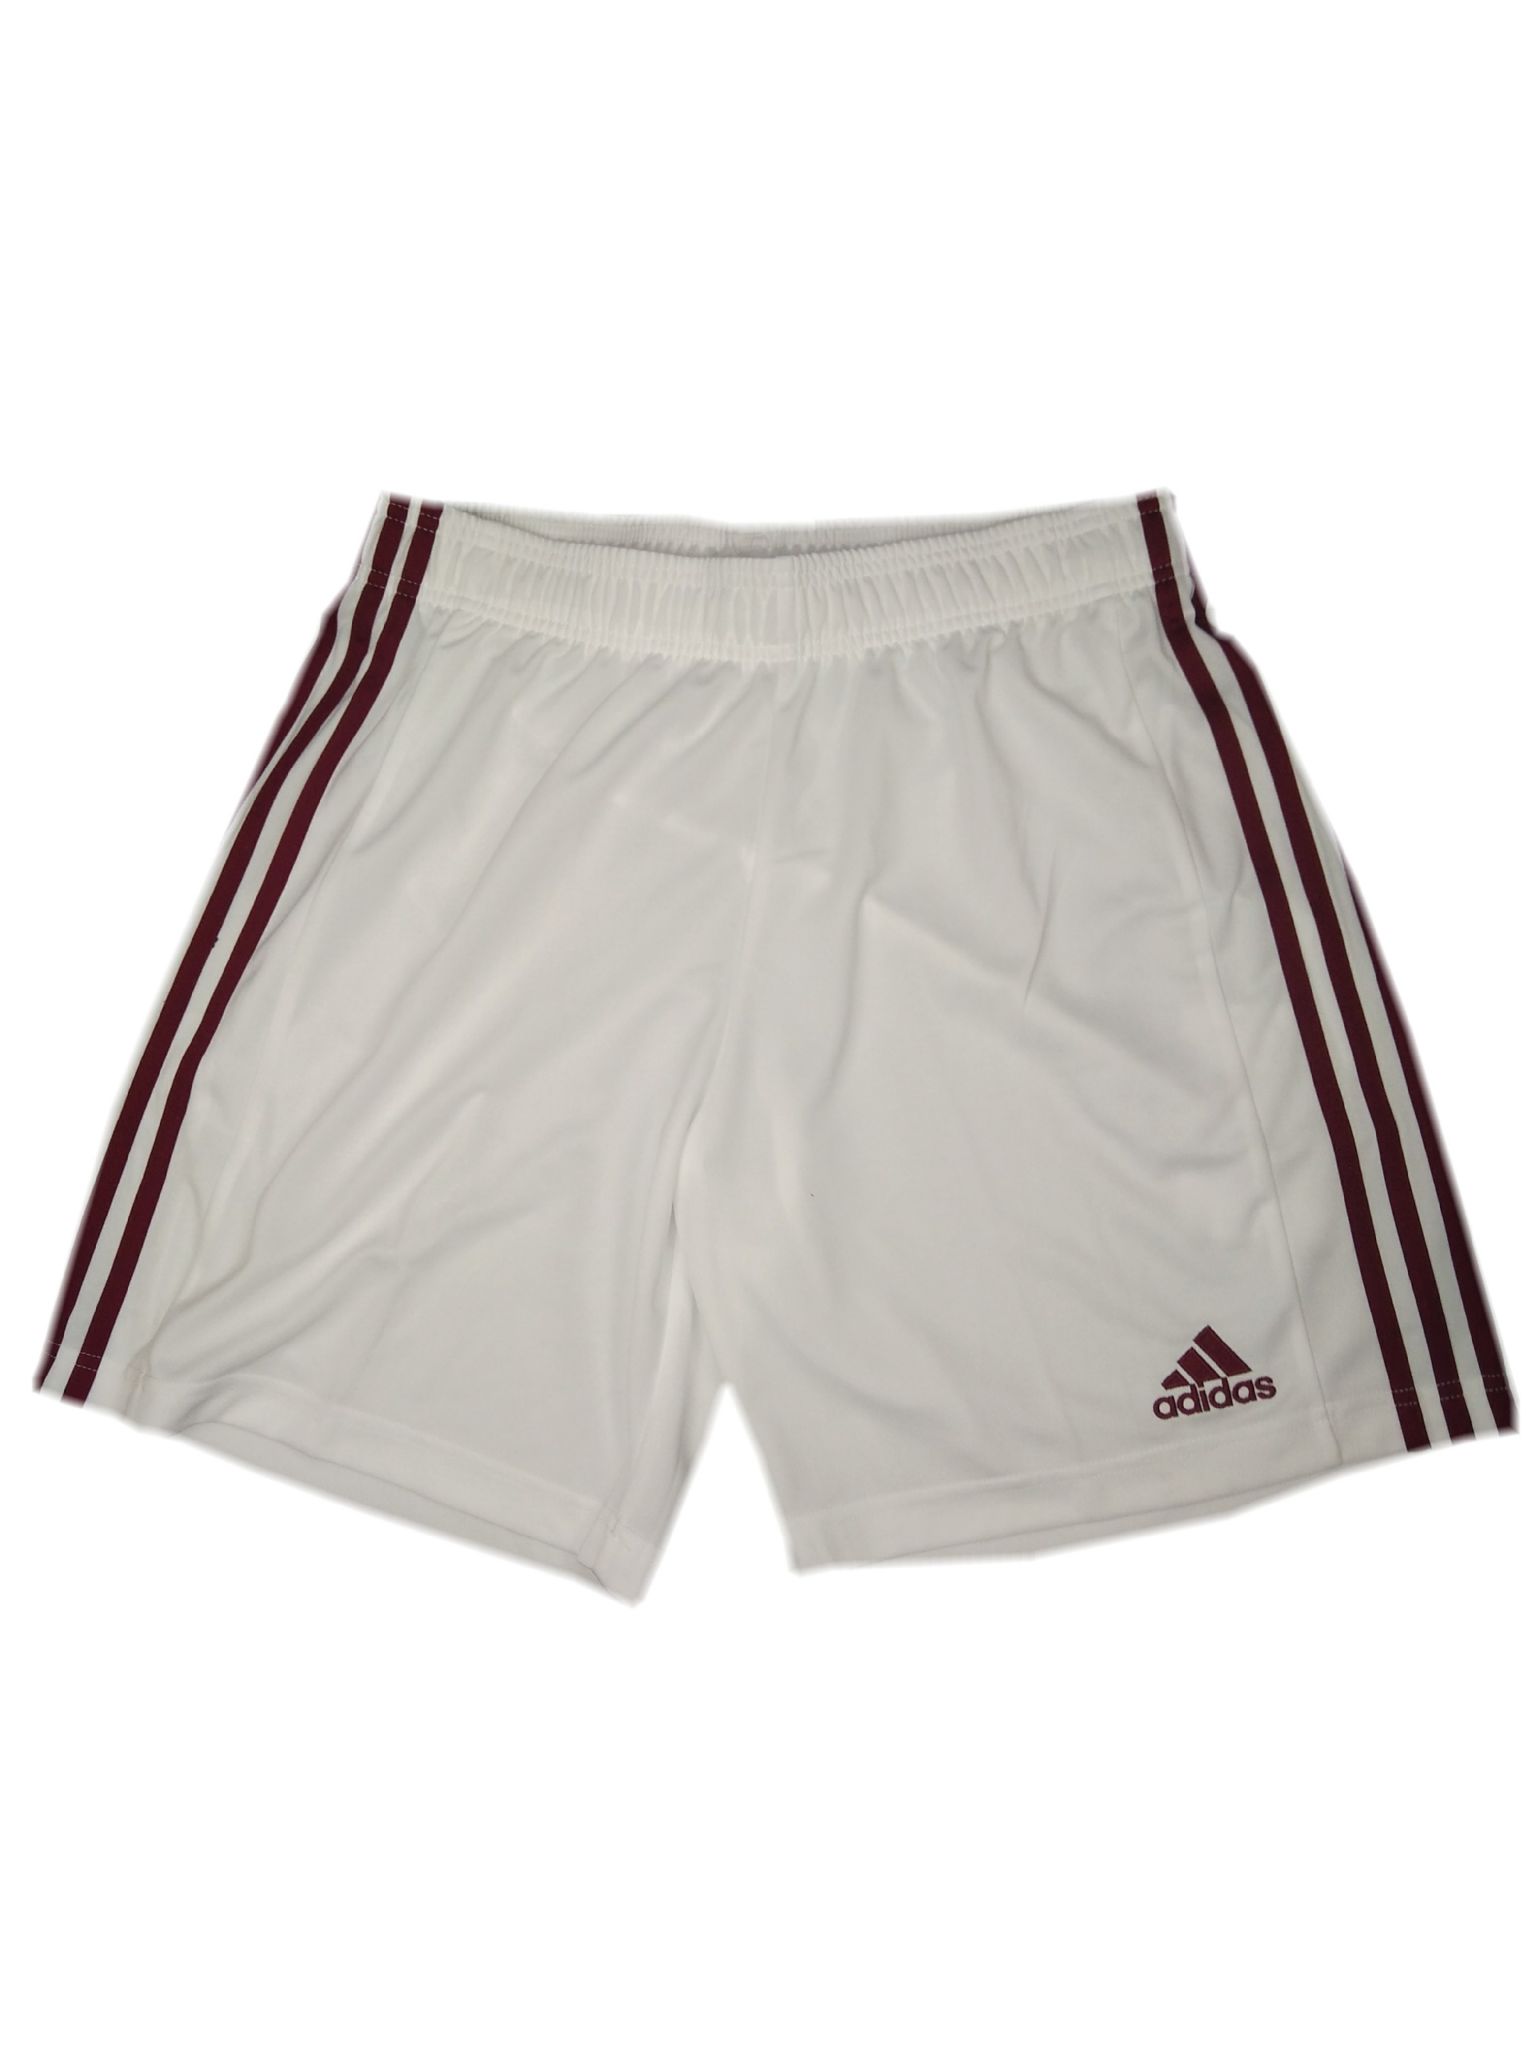 Adidas Shorts - MT FB Shorts - White 